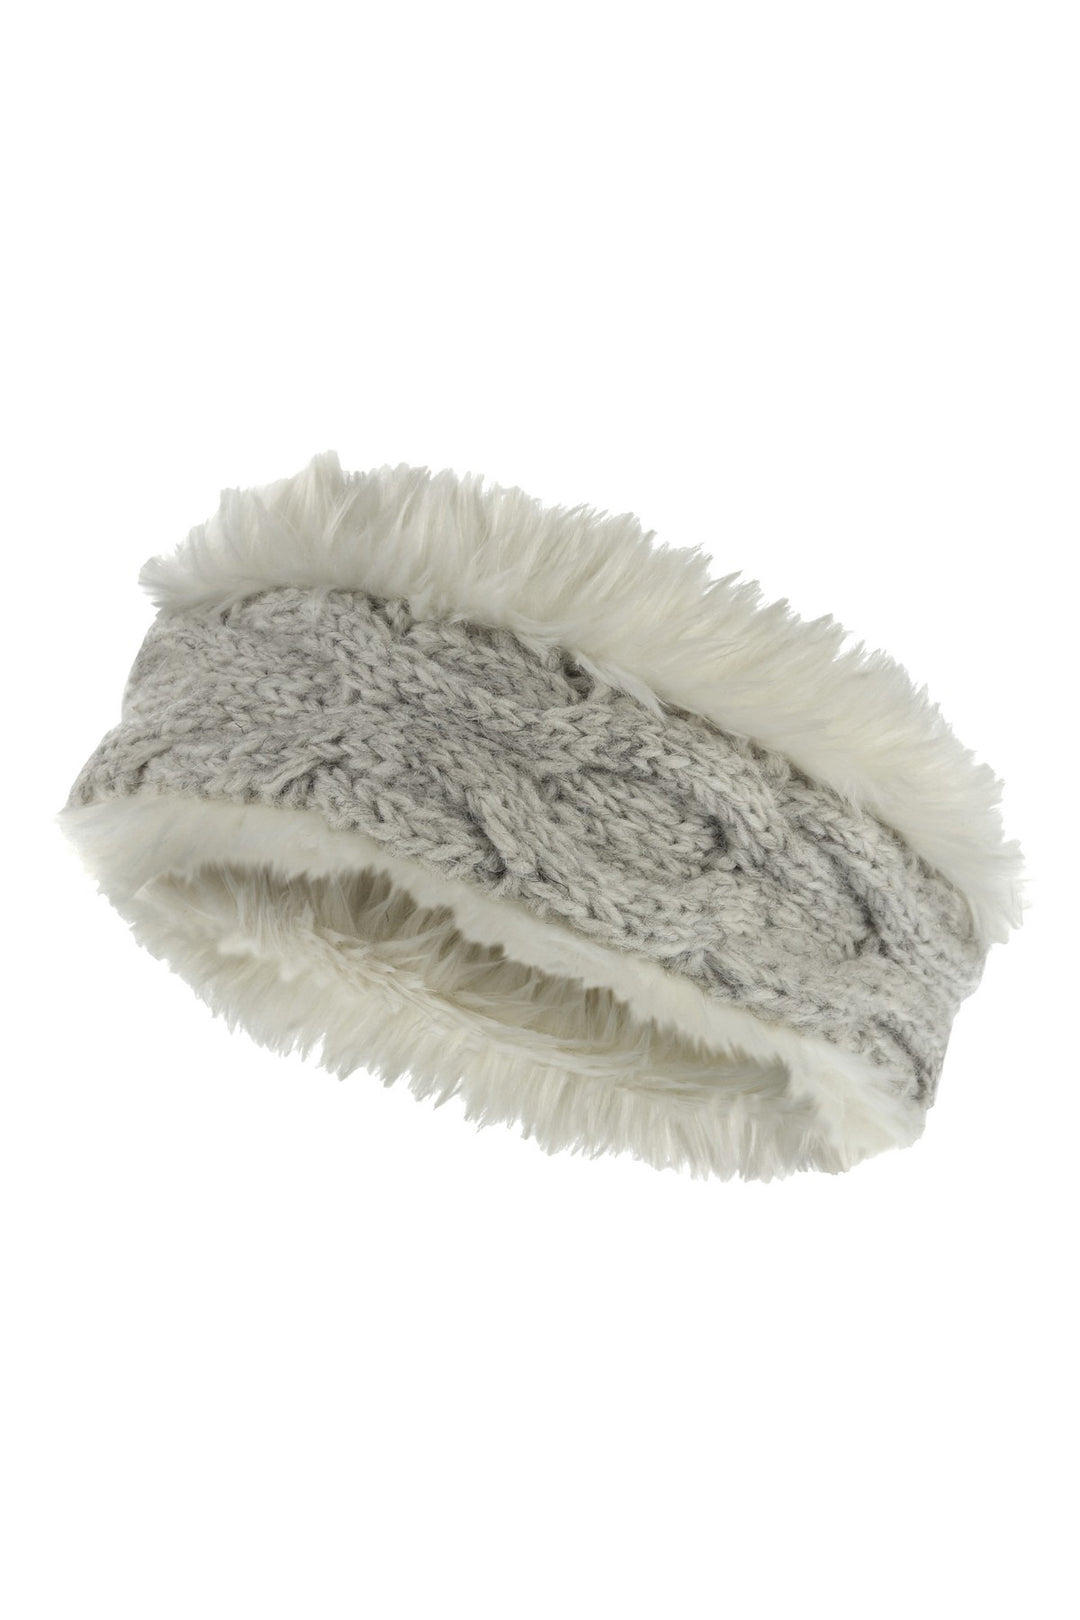 Chamonix Fur Headband - Oatmeal